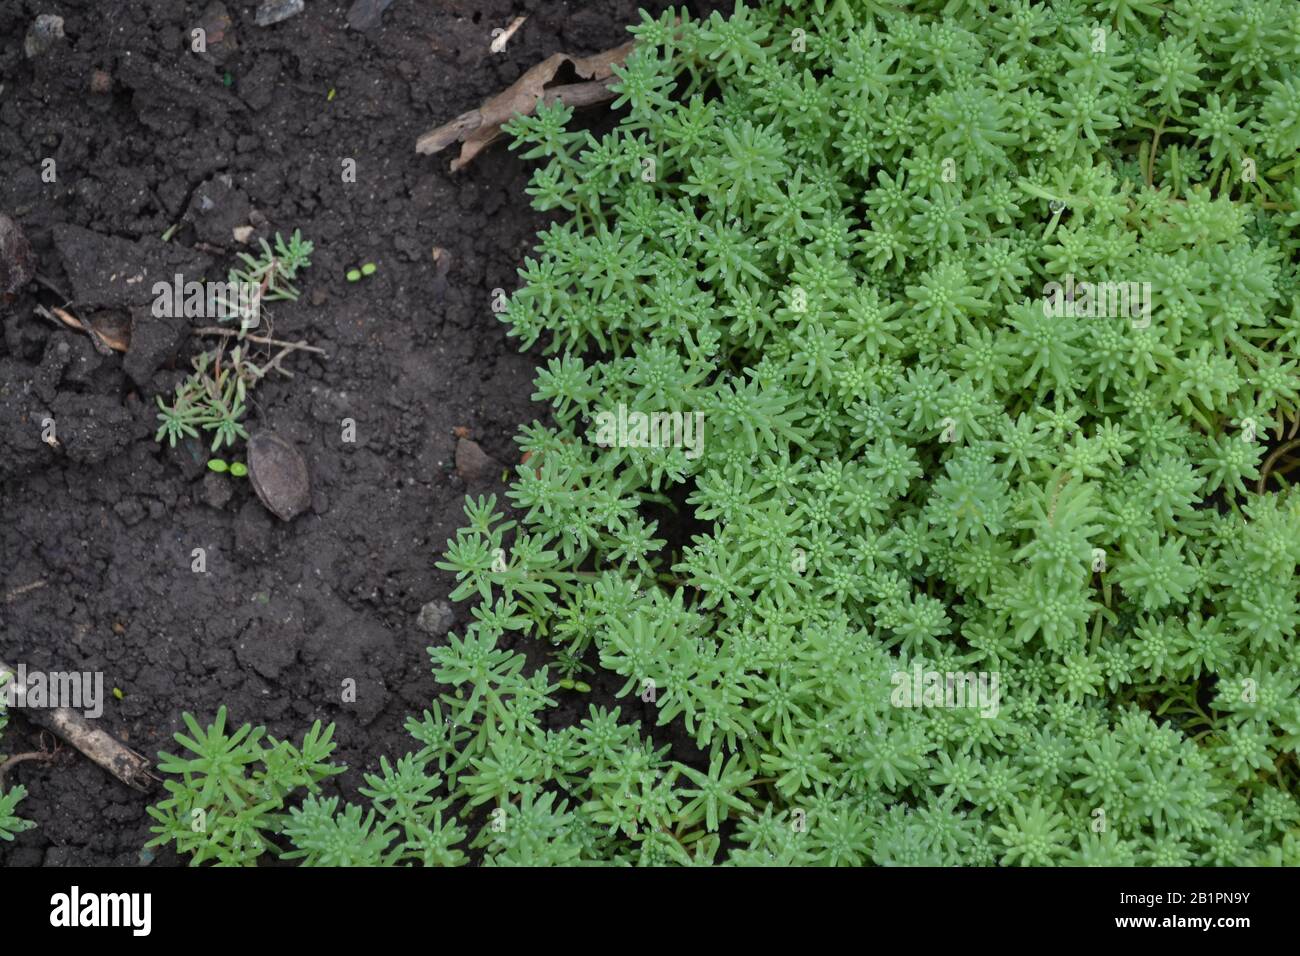 Hare cabbage. Stonecrop.  Sedum. Green moss. Decorative grassy carpet. Flower bed. Horizontal photo Stock Photo